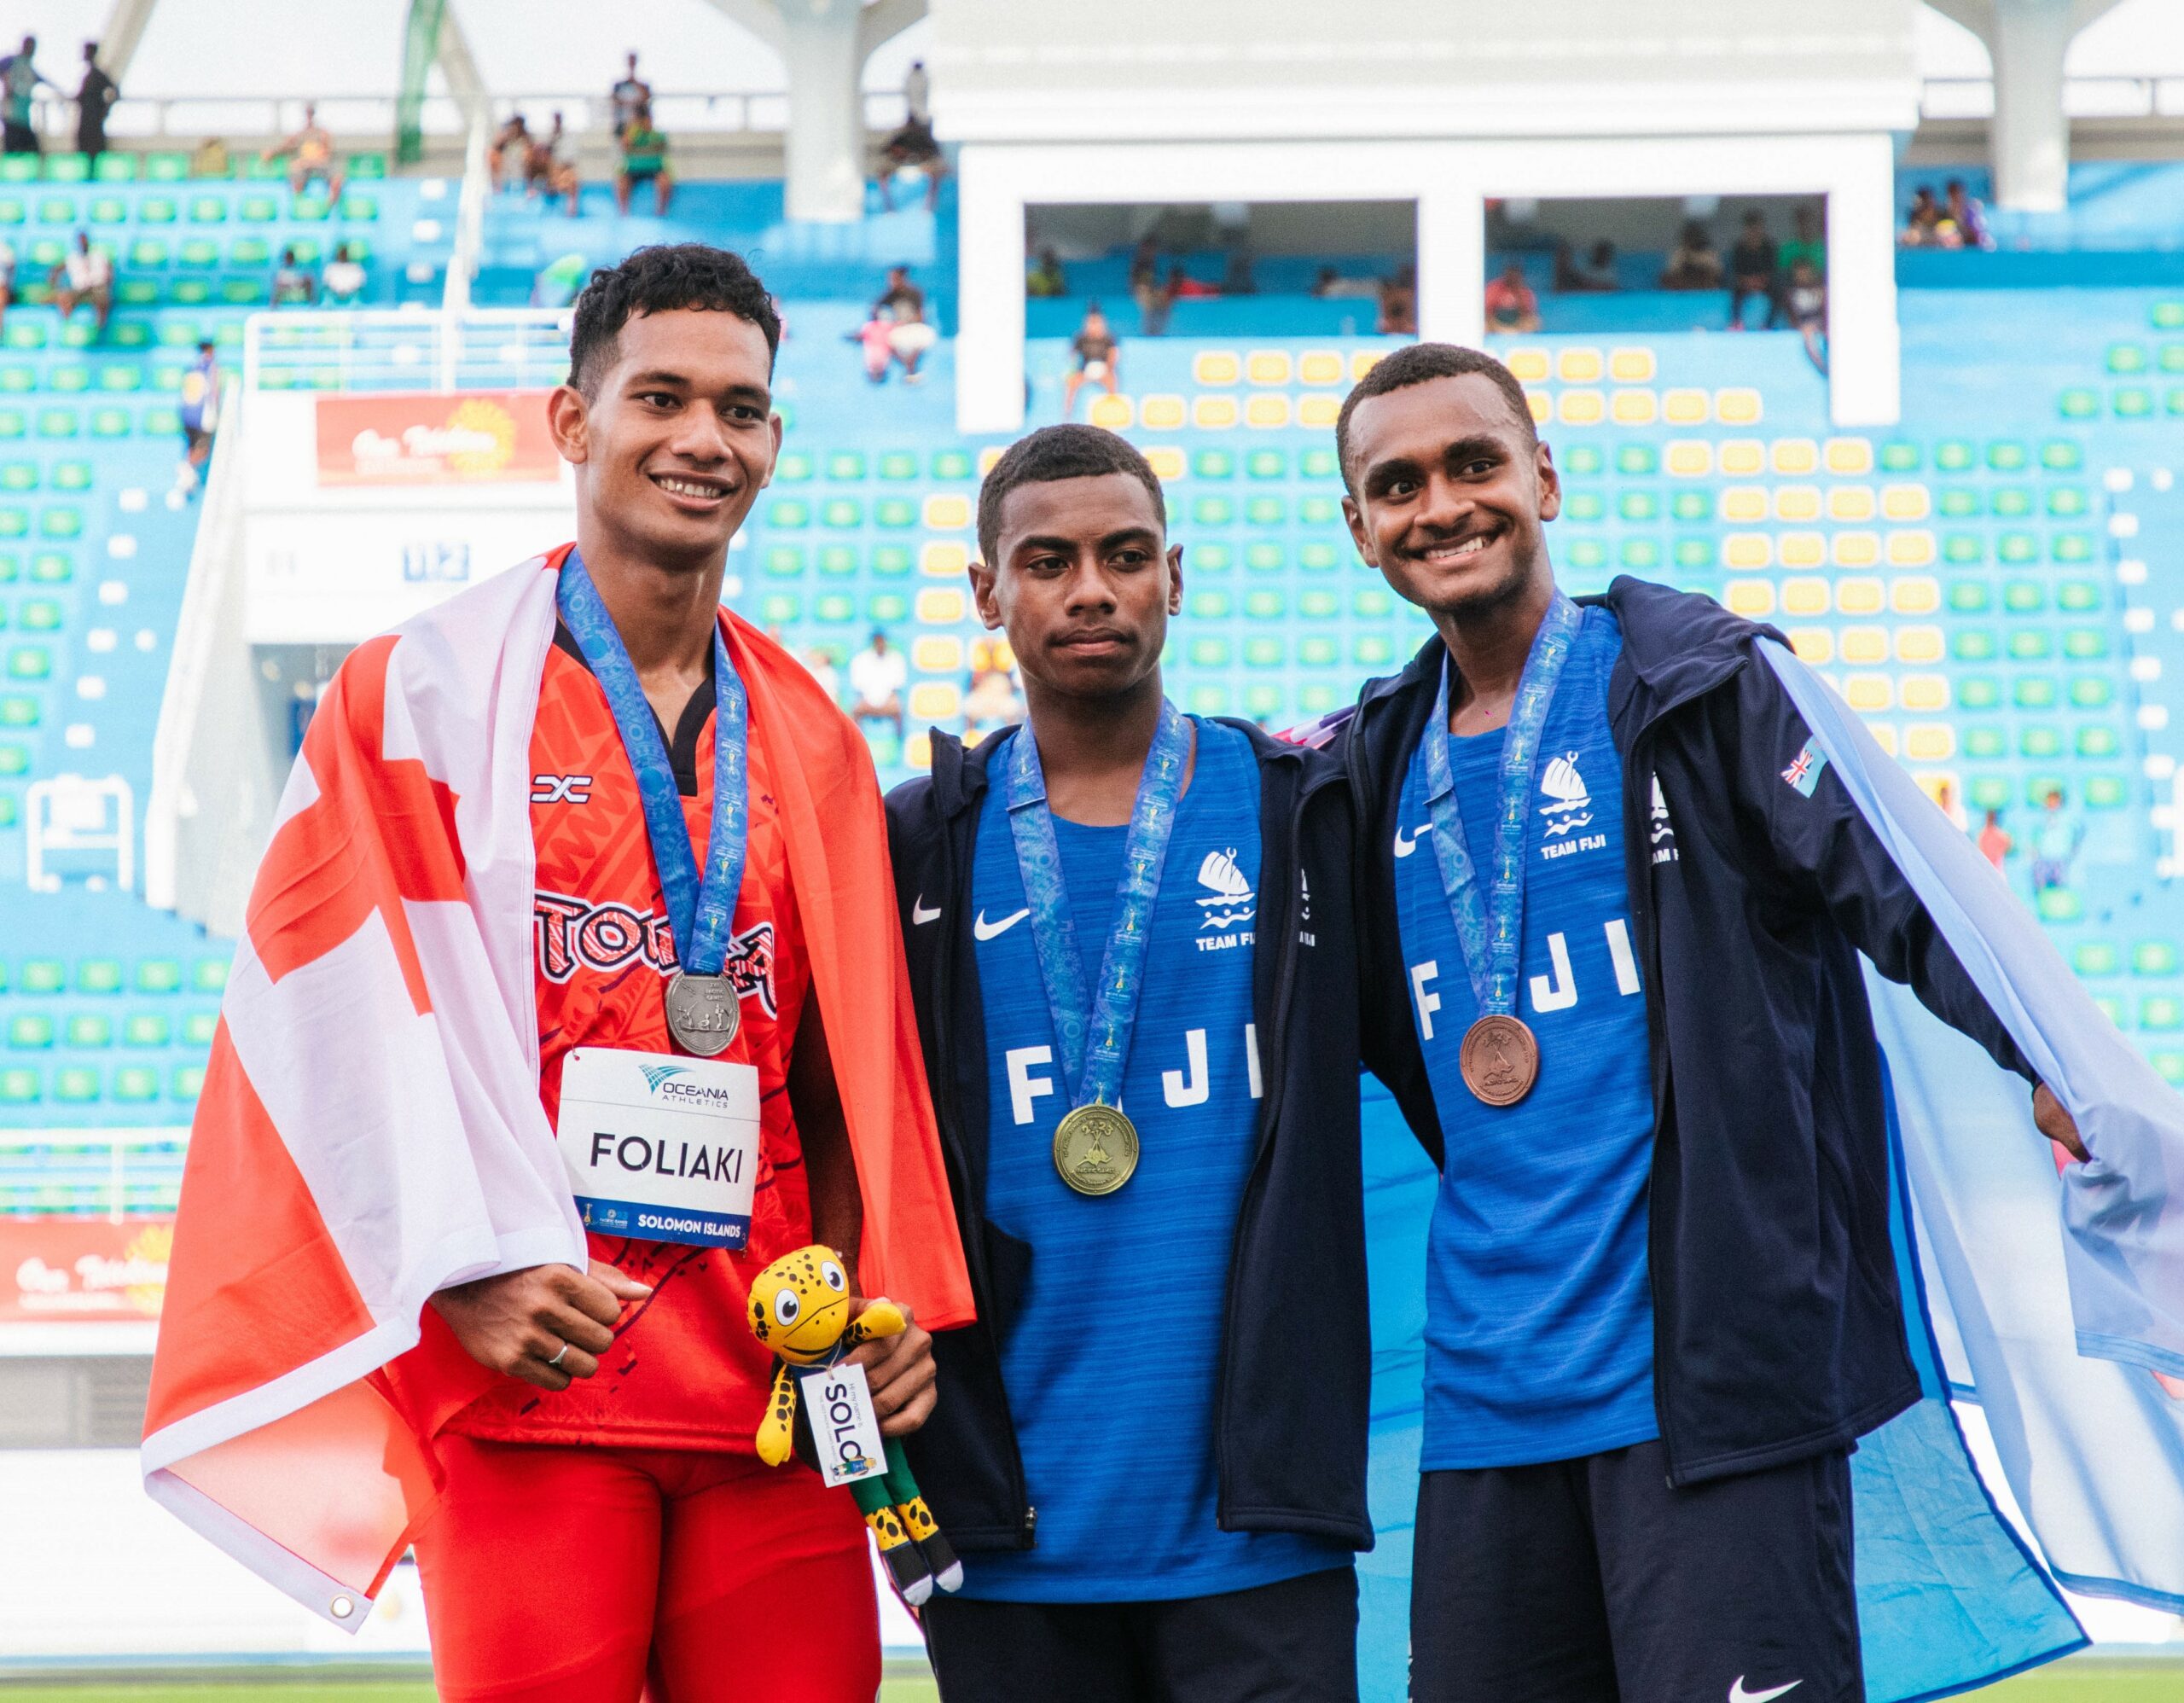 Men on a medal podium